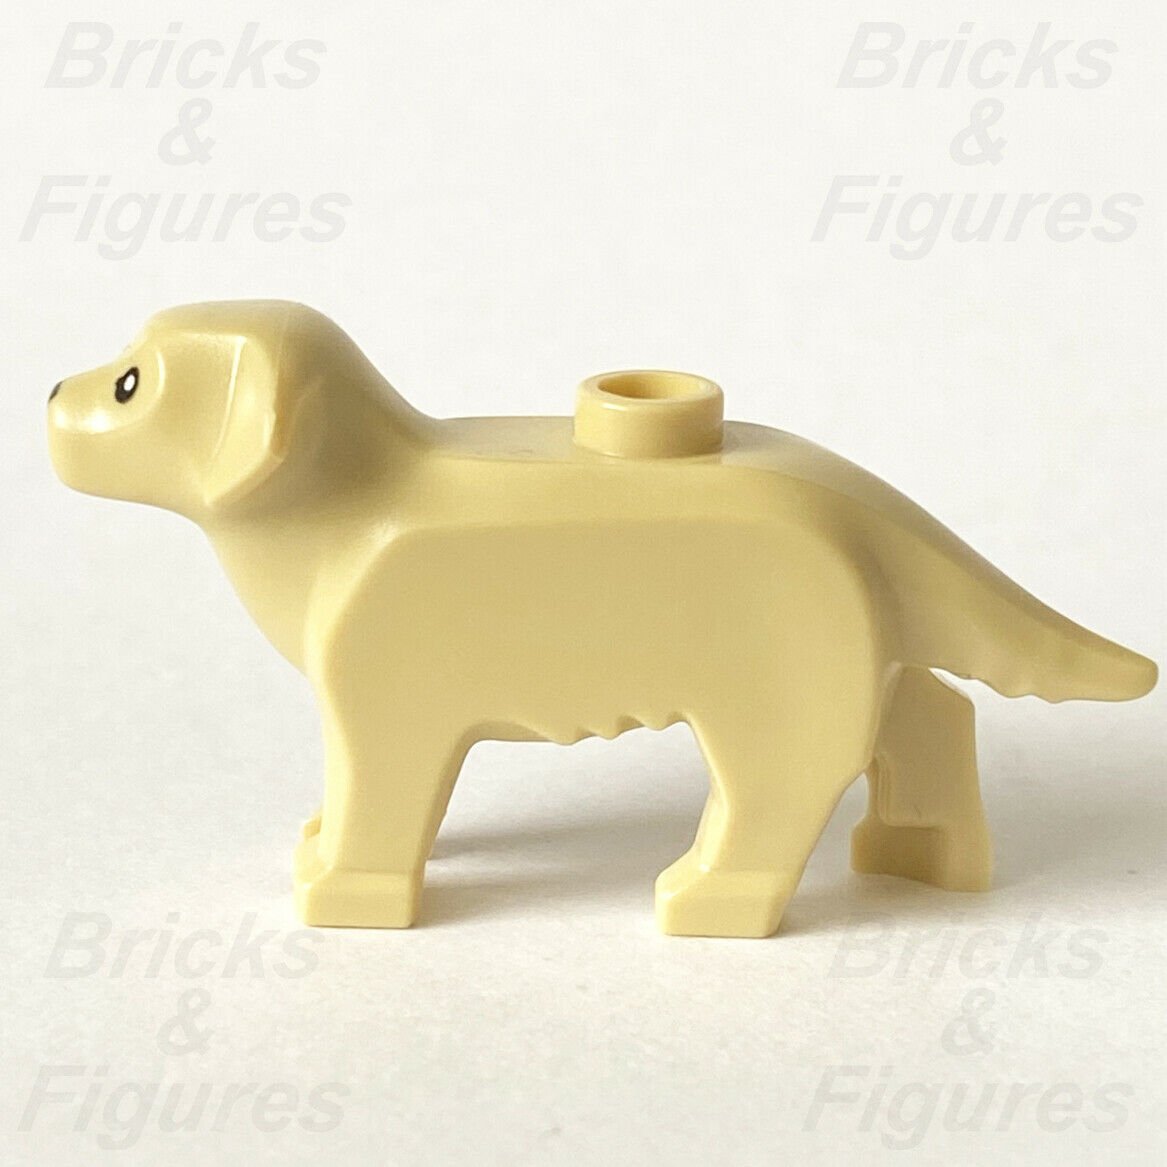 New City Town LEGO Labrador / Golden Retriever Dog Animal Part from set 60291 - Bricks & Figures